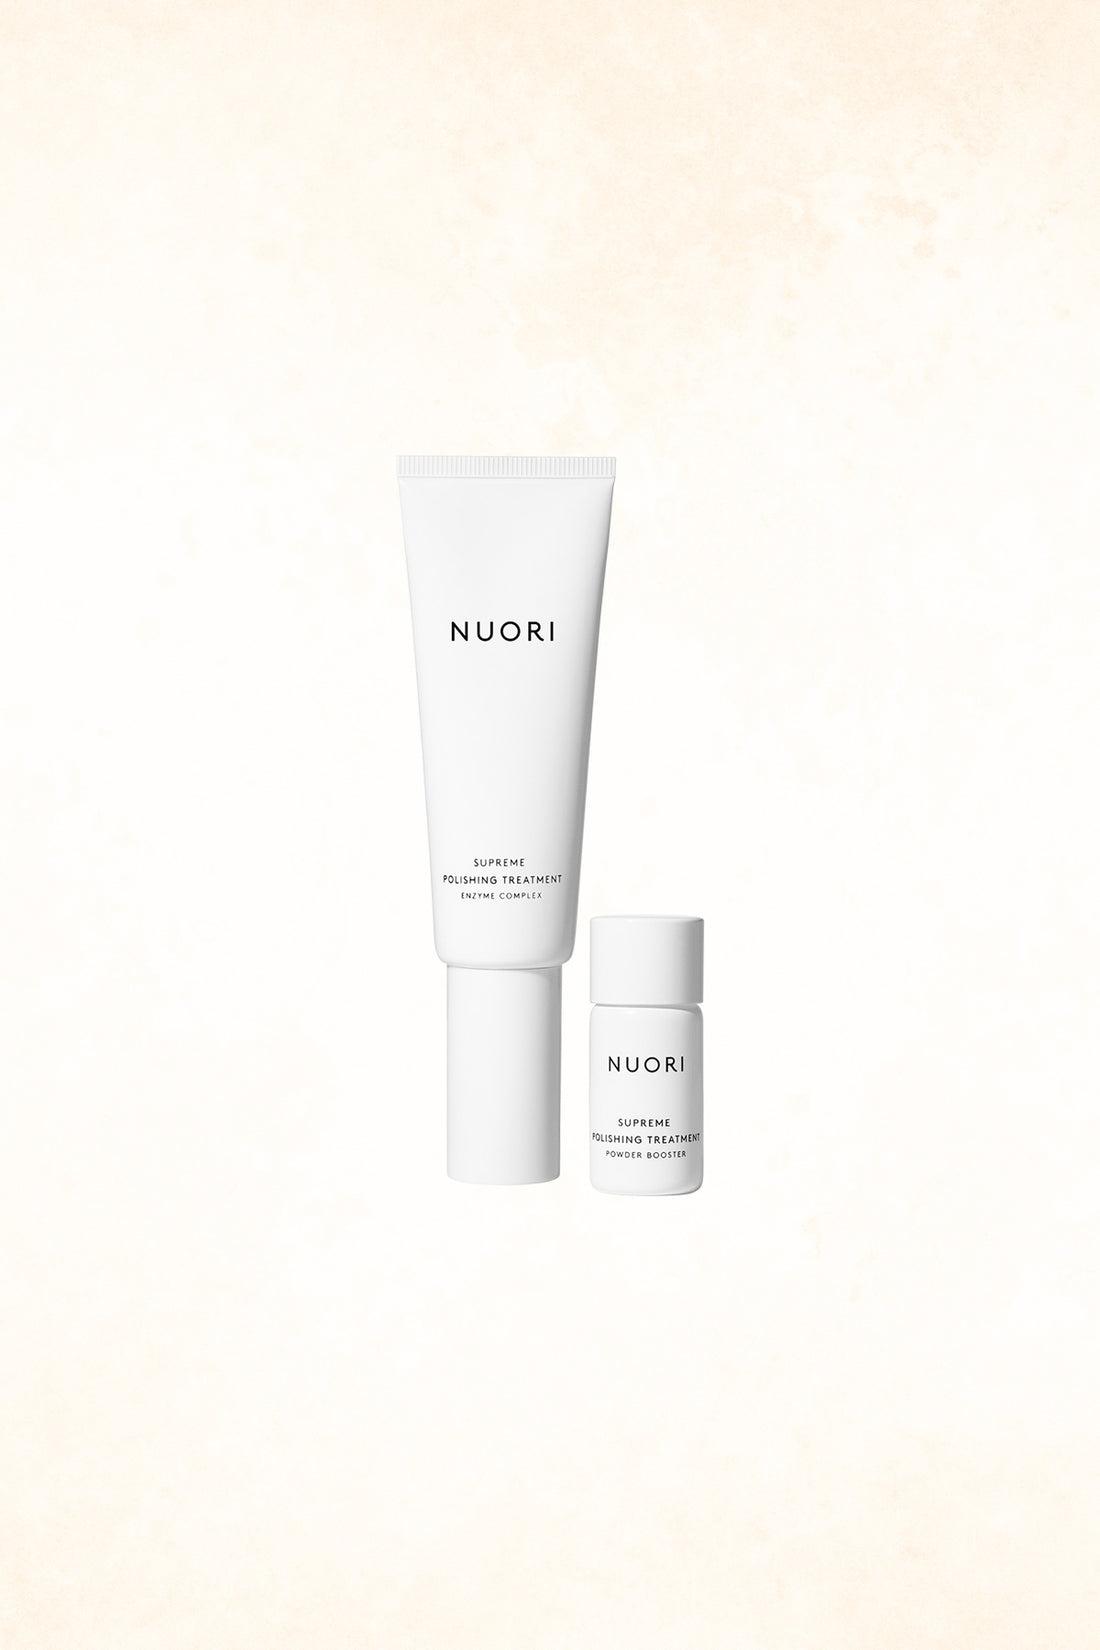 Nuori – Supreme Polishing Treatment – 45 ml